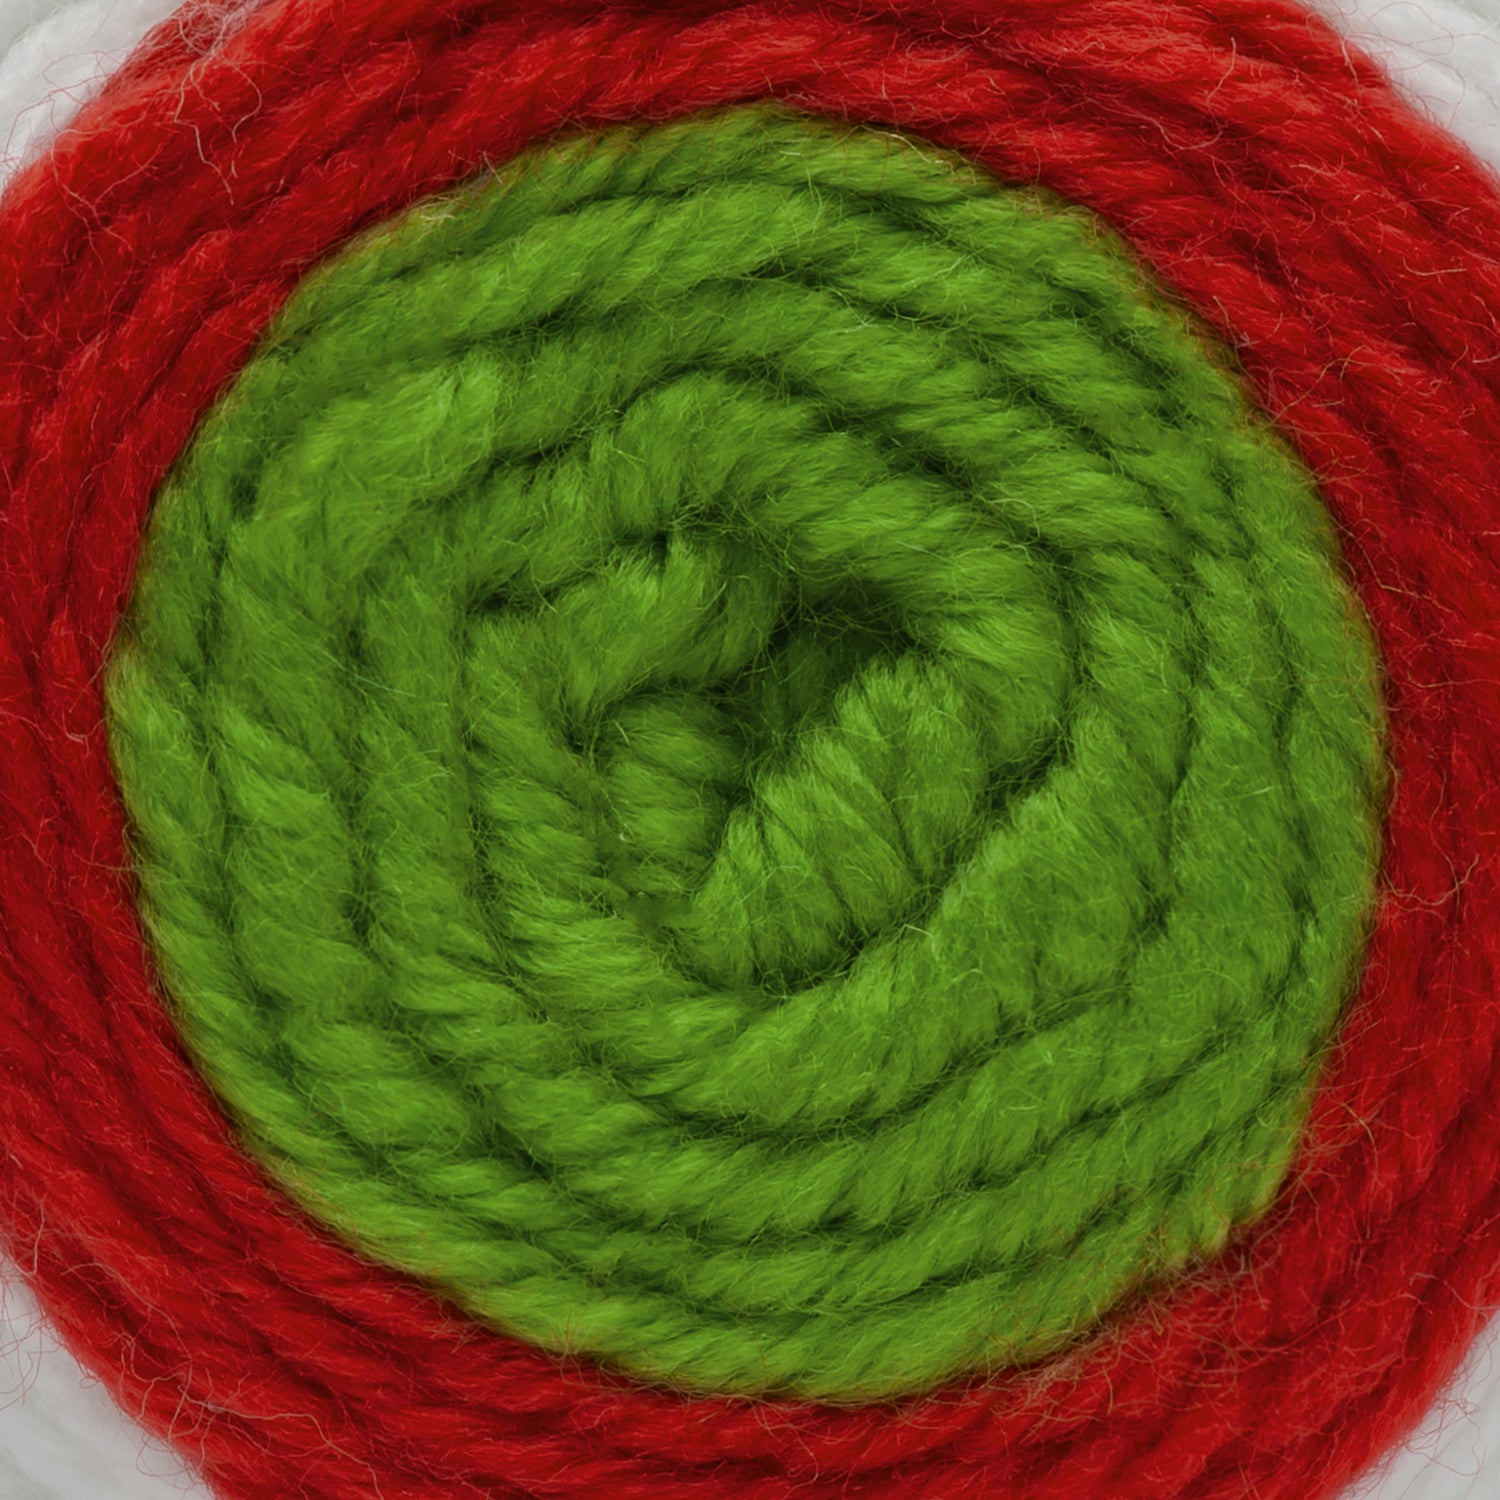 Red Heart Mini Yarn - Clearance shades